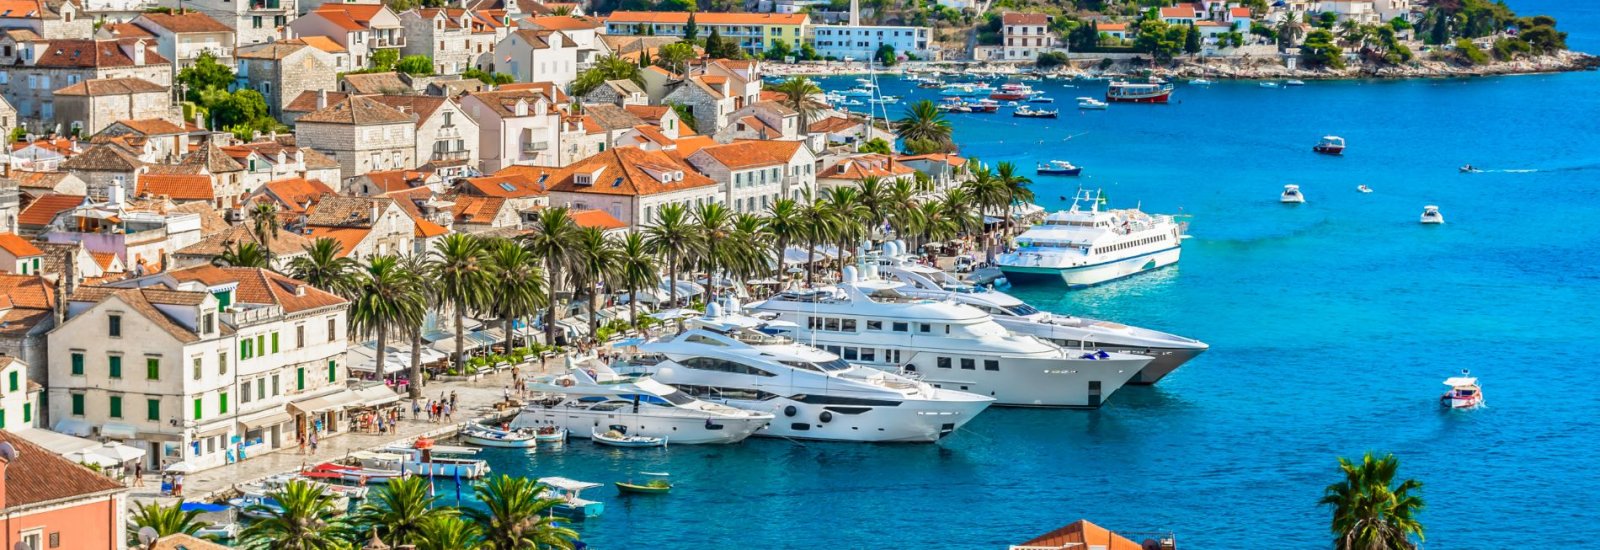 Yachts in Croatia